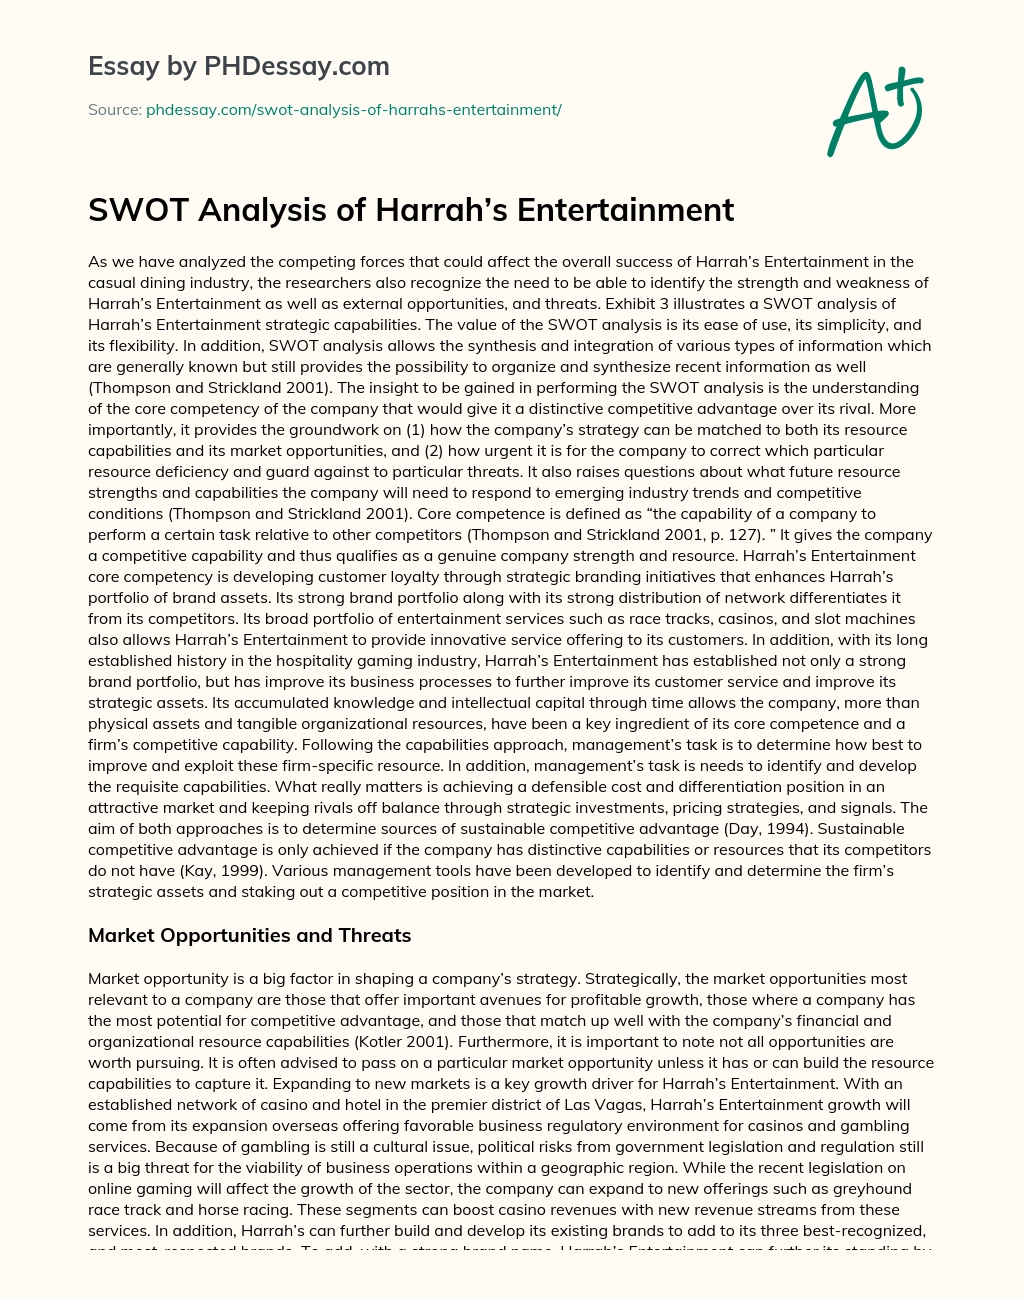 SWOT Analysis of Harrah’s Entertainment essay